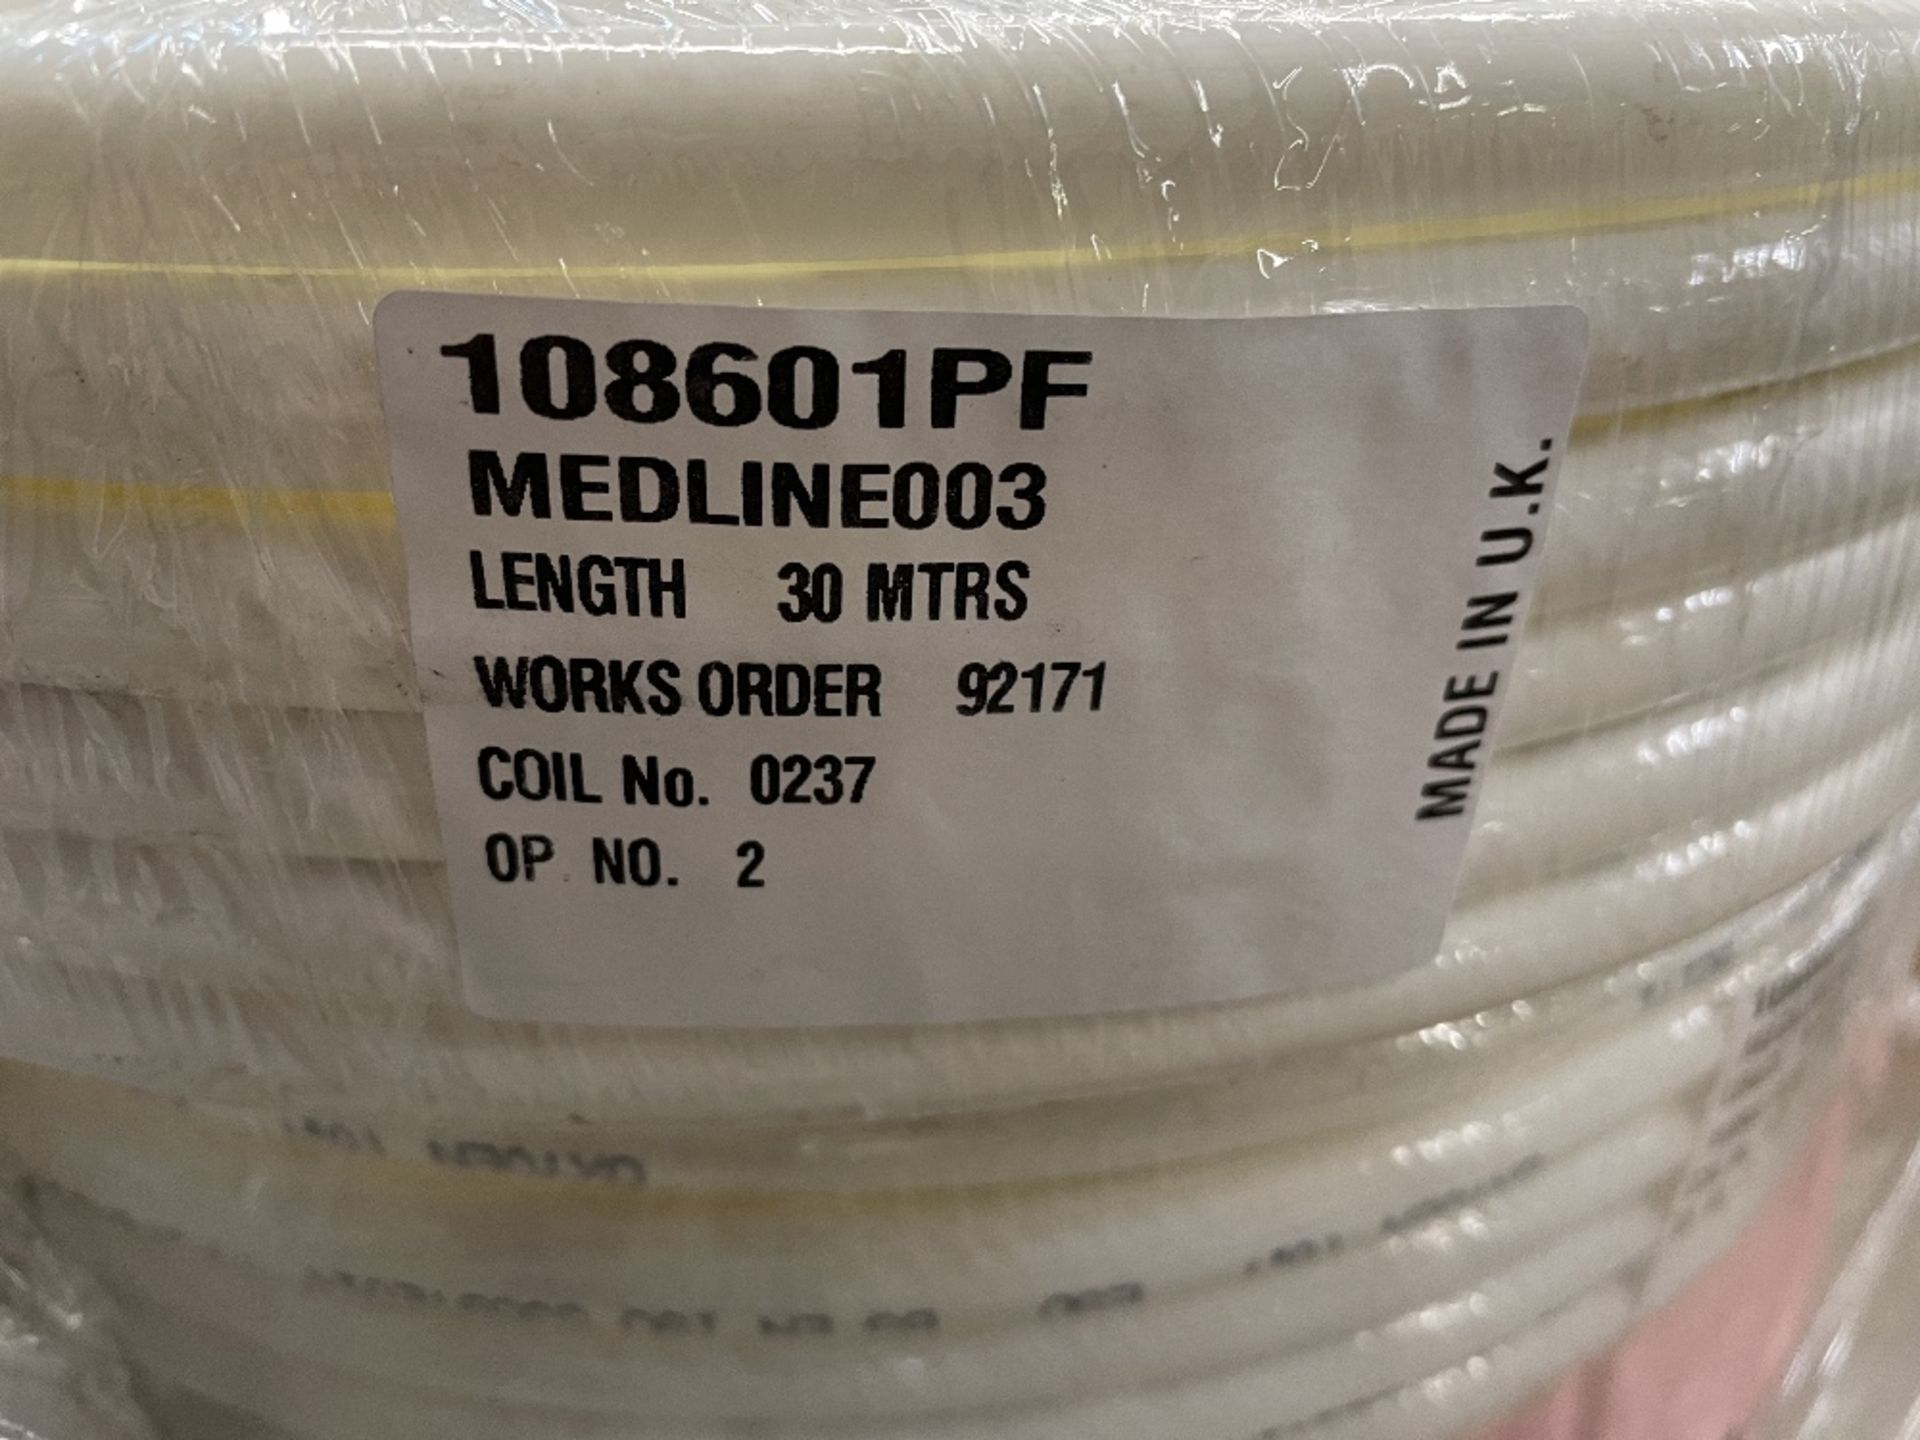 42 x Reels of MEDLINE003 108601PF O2 Tubing | 30m in length - Image 7 of 7